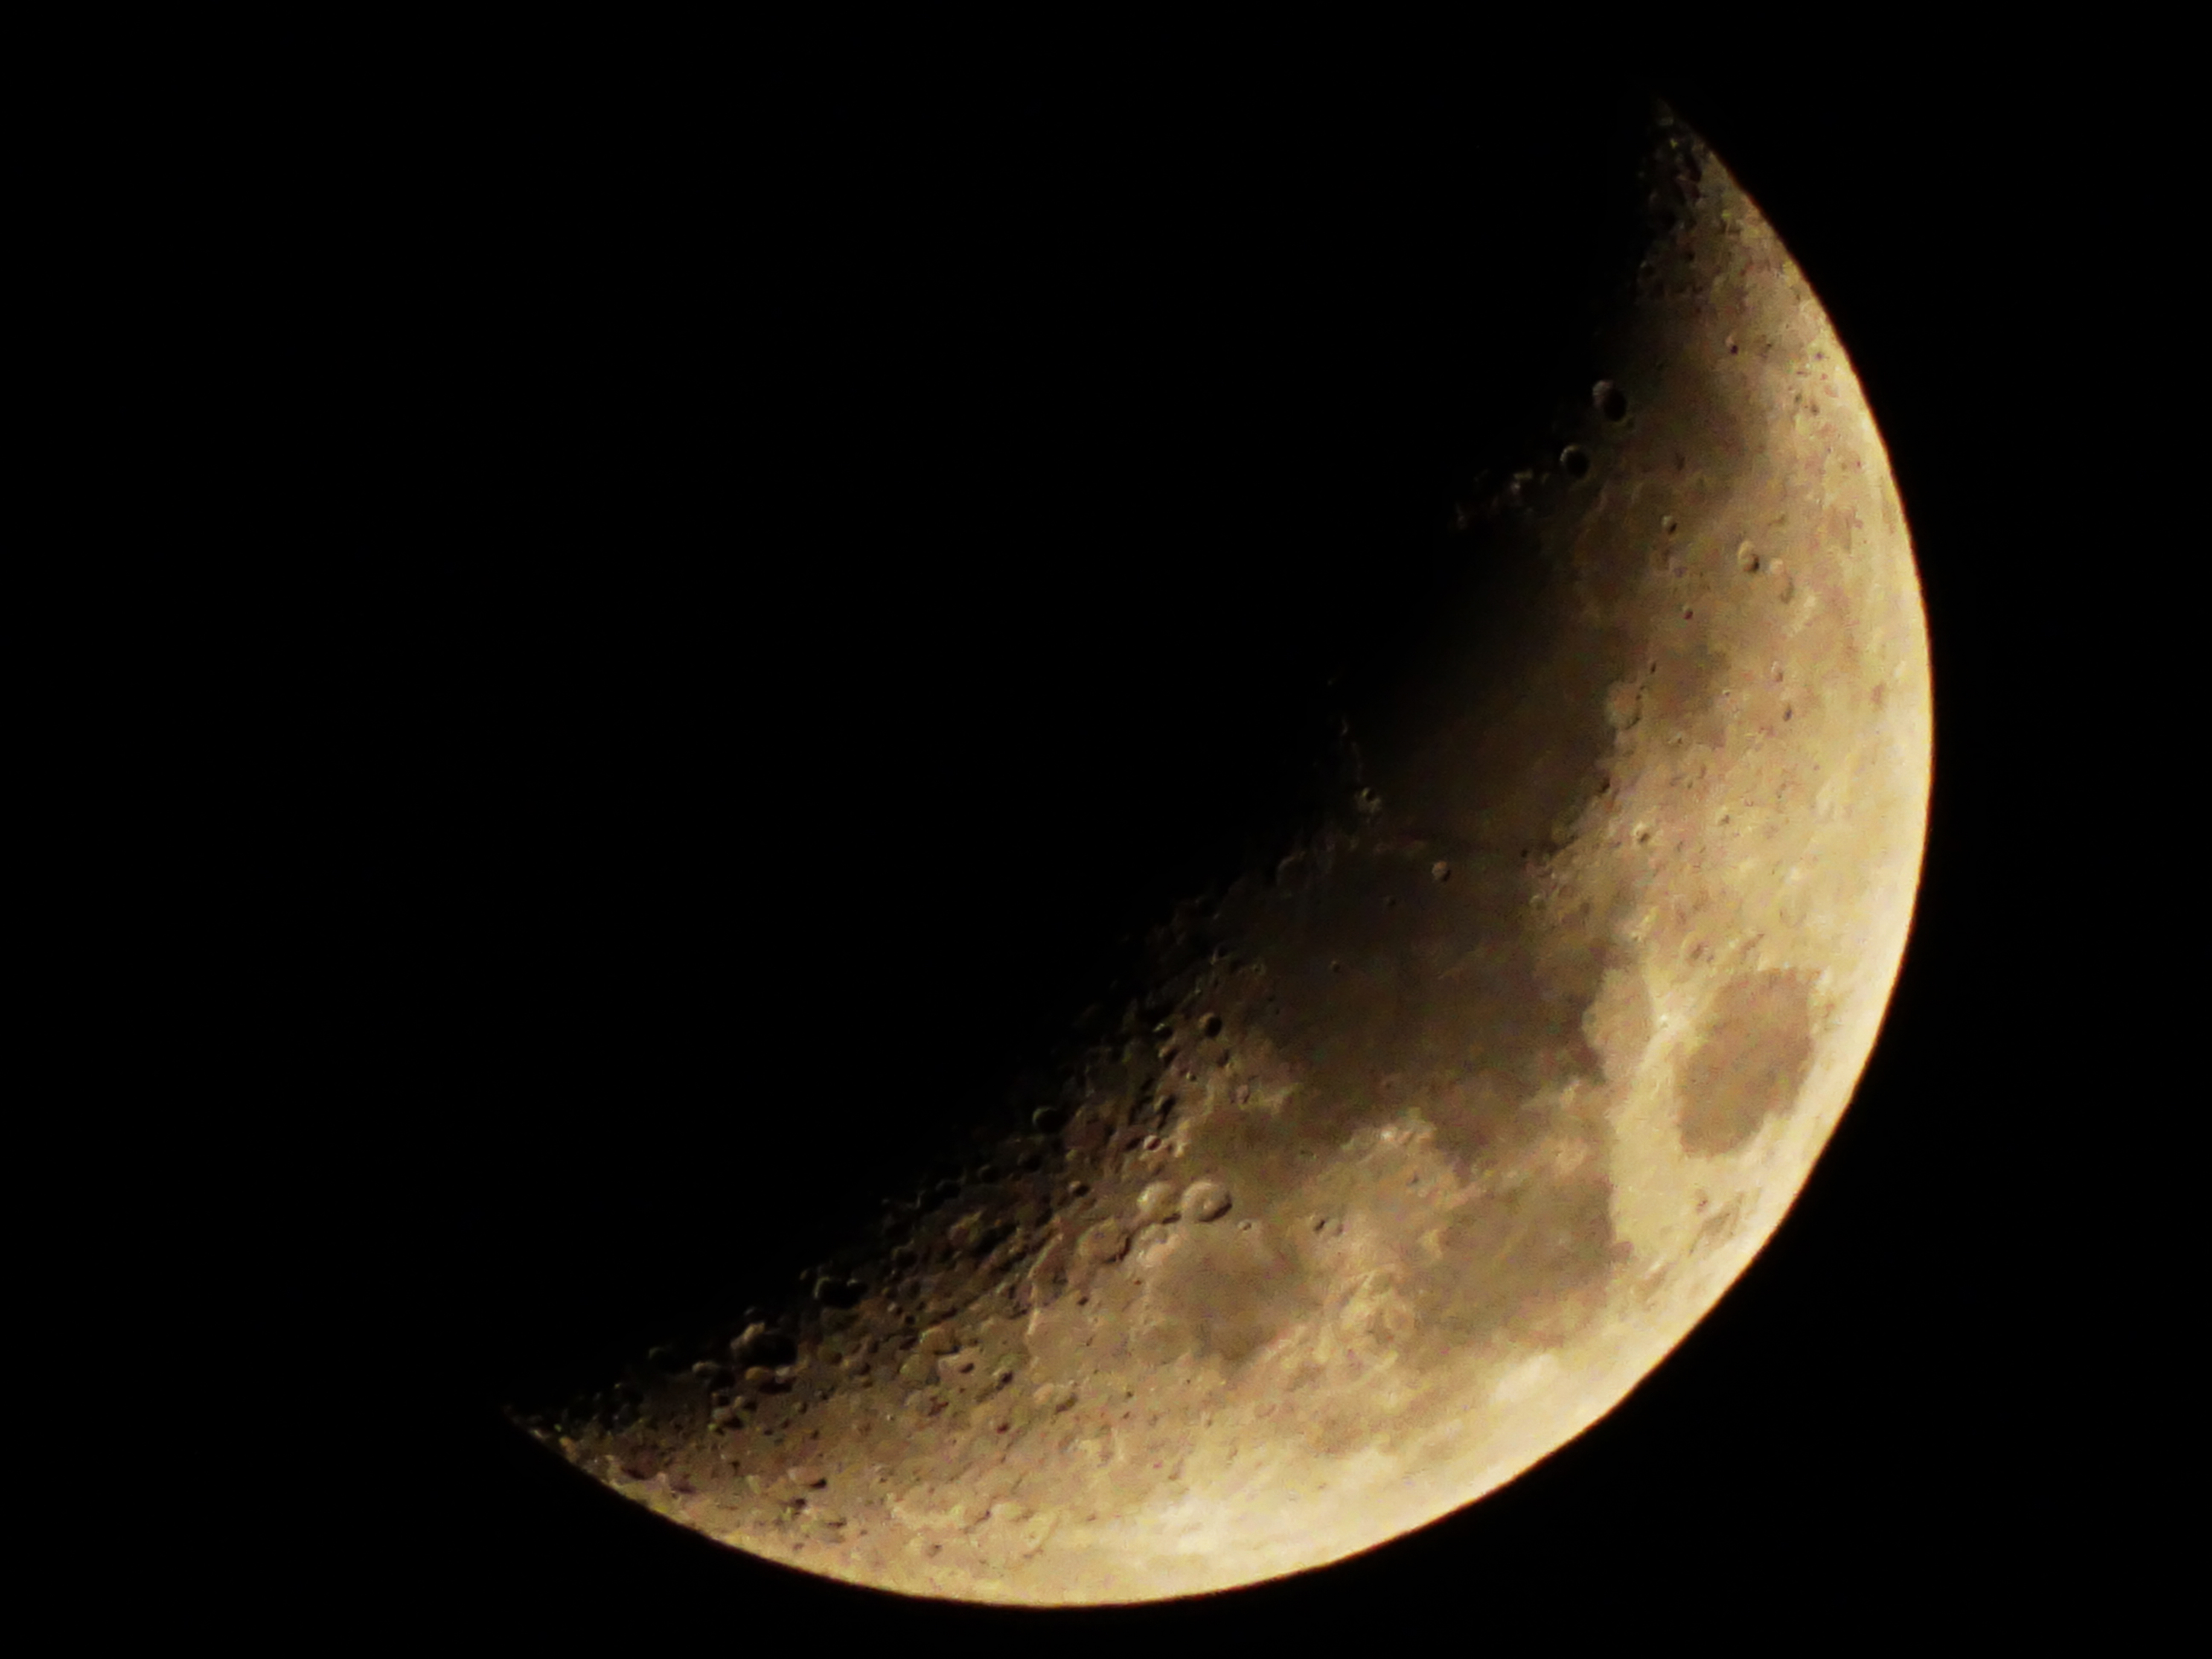 File:Half moon in the sky.JPG - Wikimedia Commons